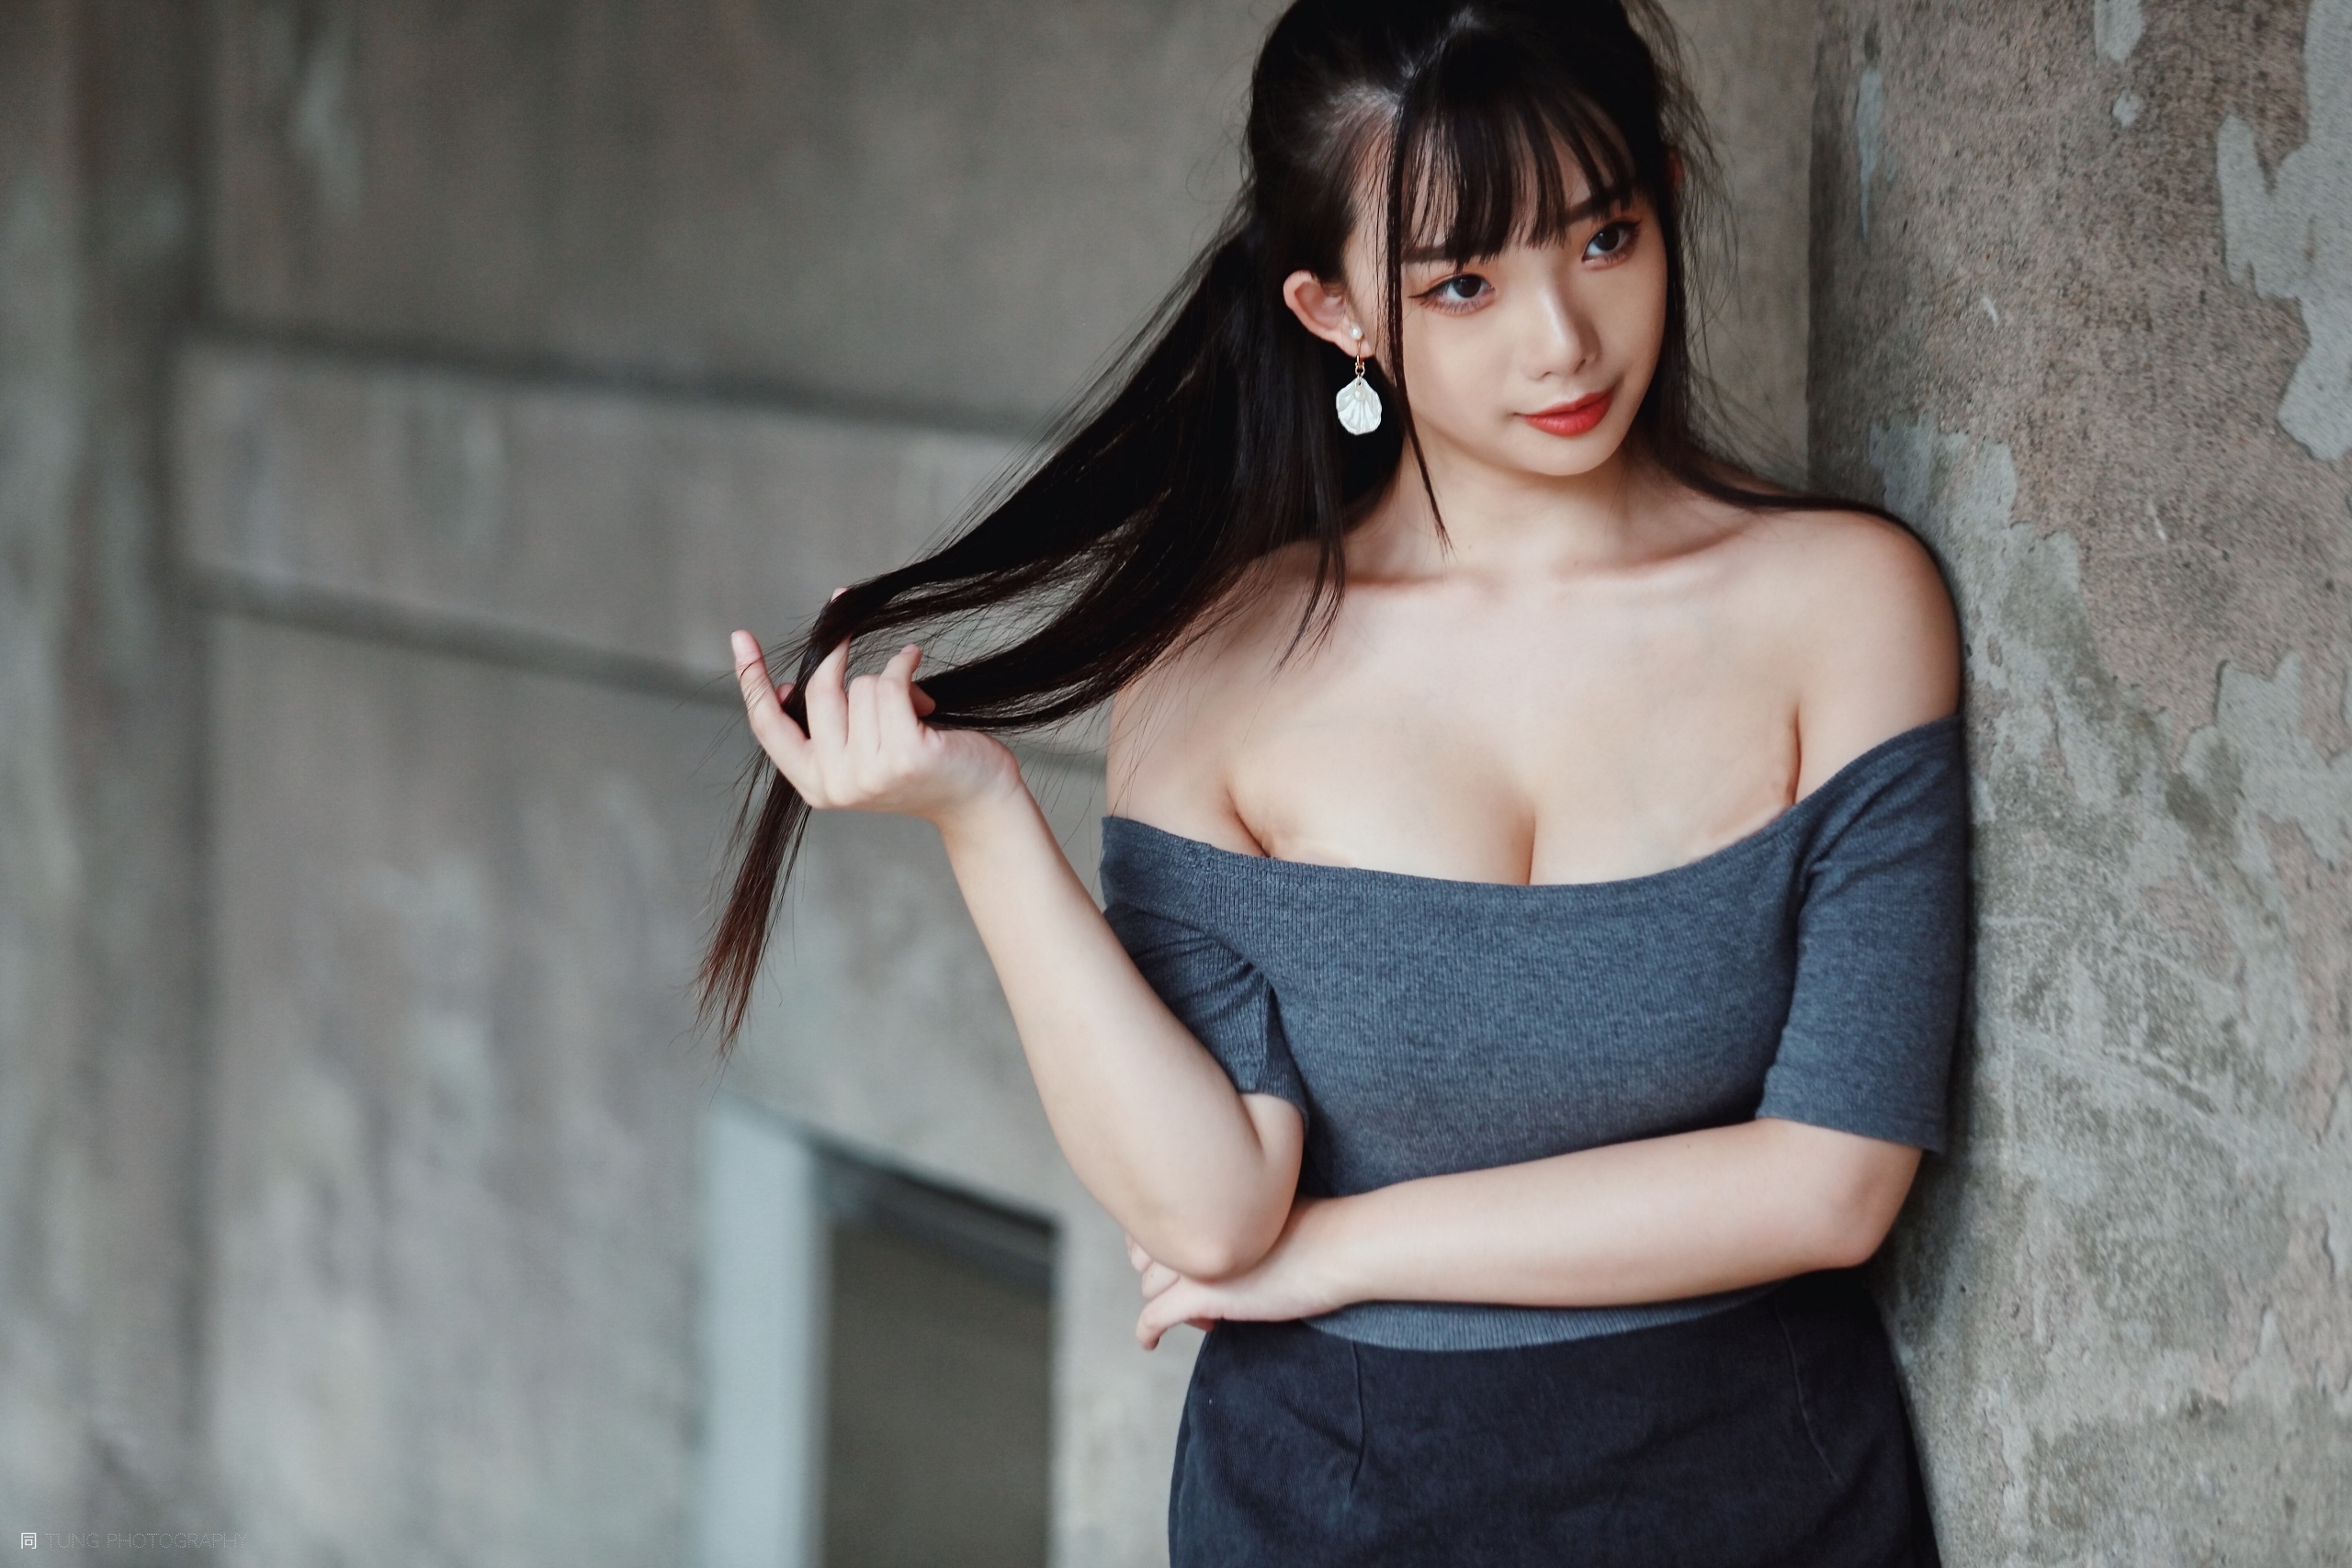 Ning Shioulin Women Model Asian Brunette Bare Shoulders Crop Top Portrait Outdoors Women Outdoors 2560x1707